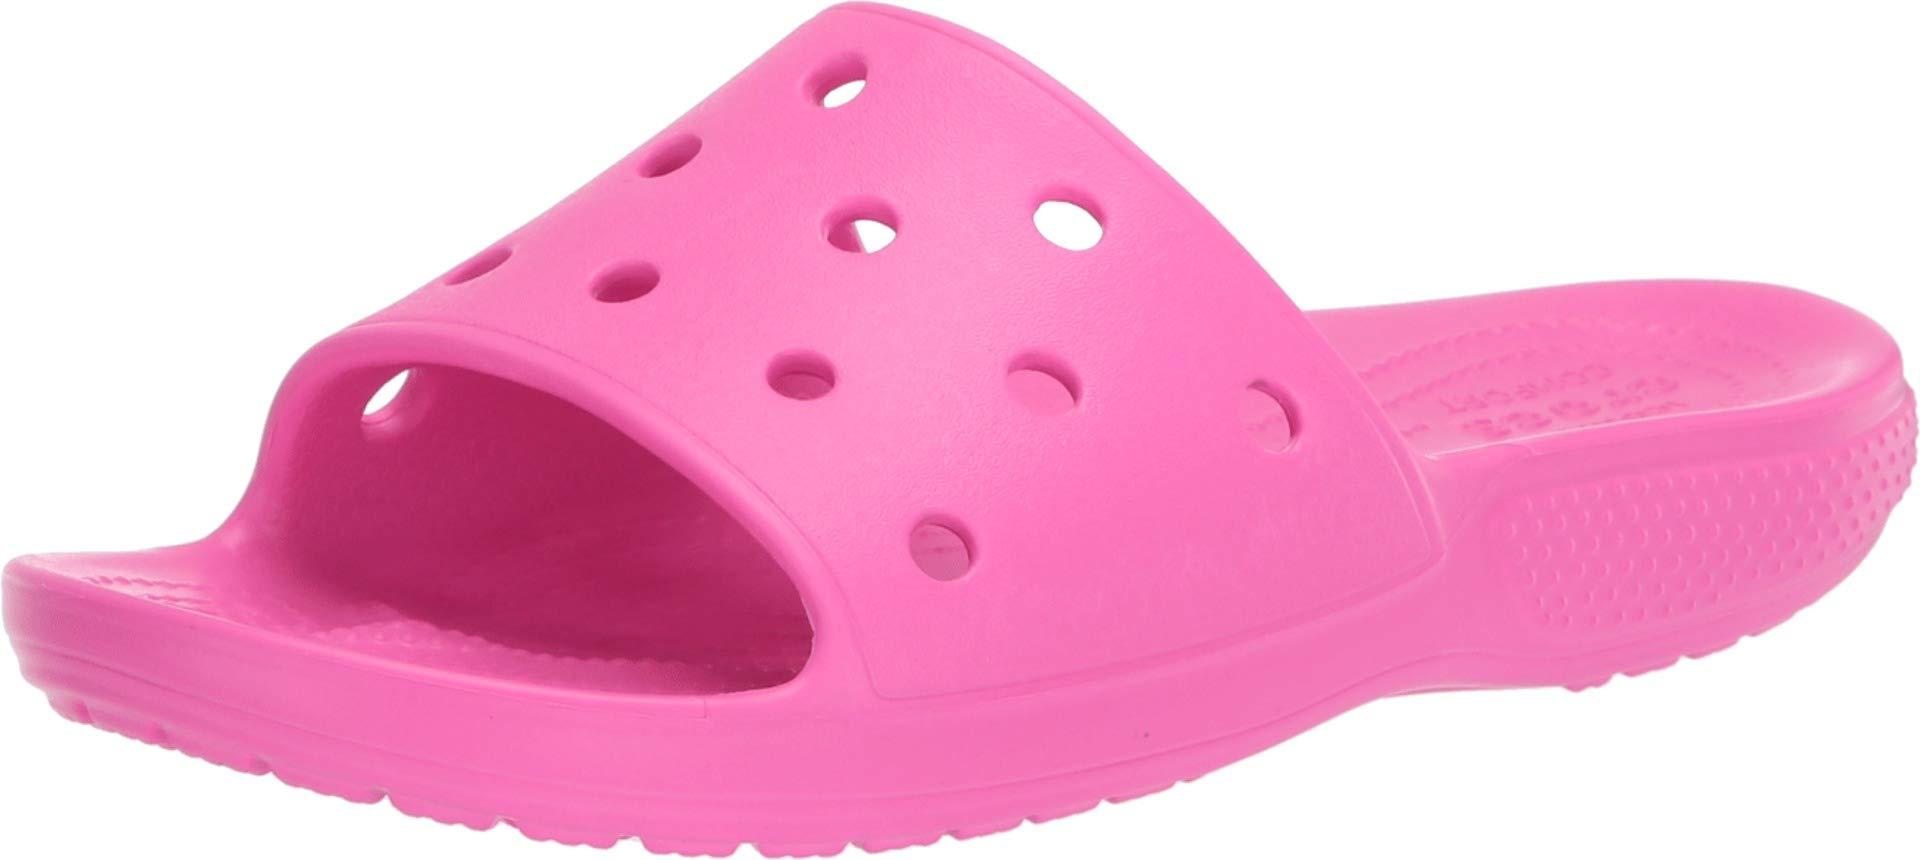 Crocs™ Classic Slide in Fuchsia (Pink) - Lyst